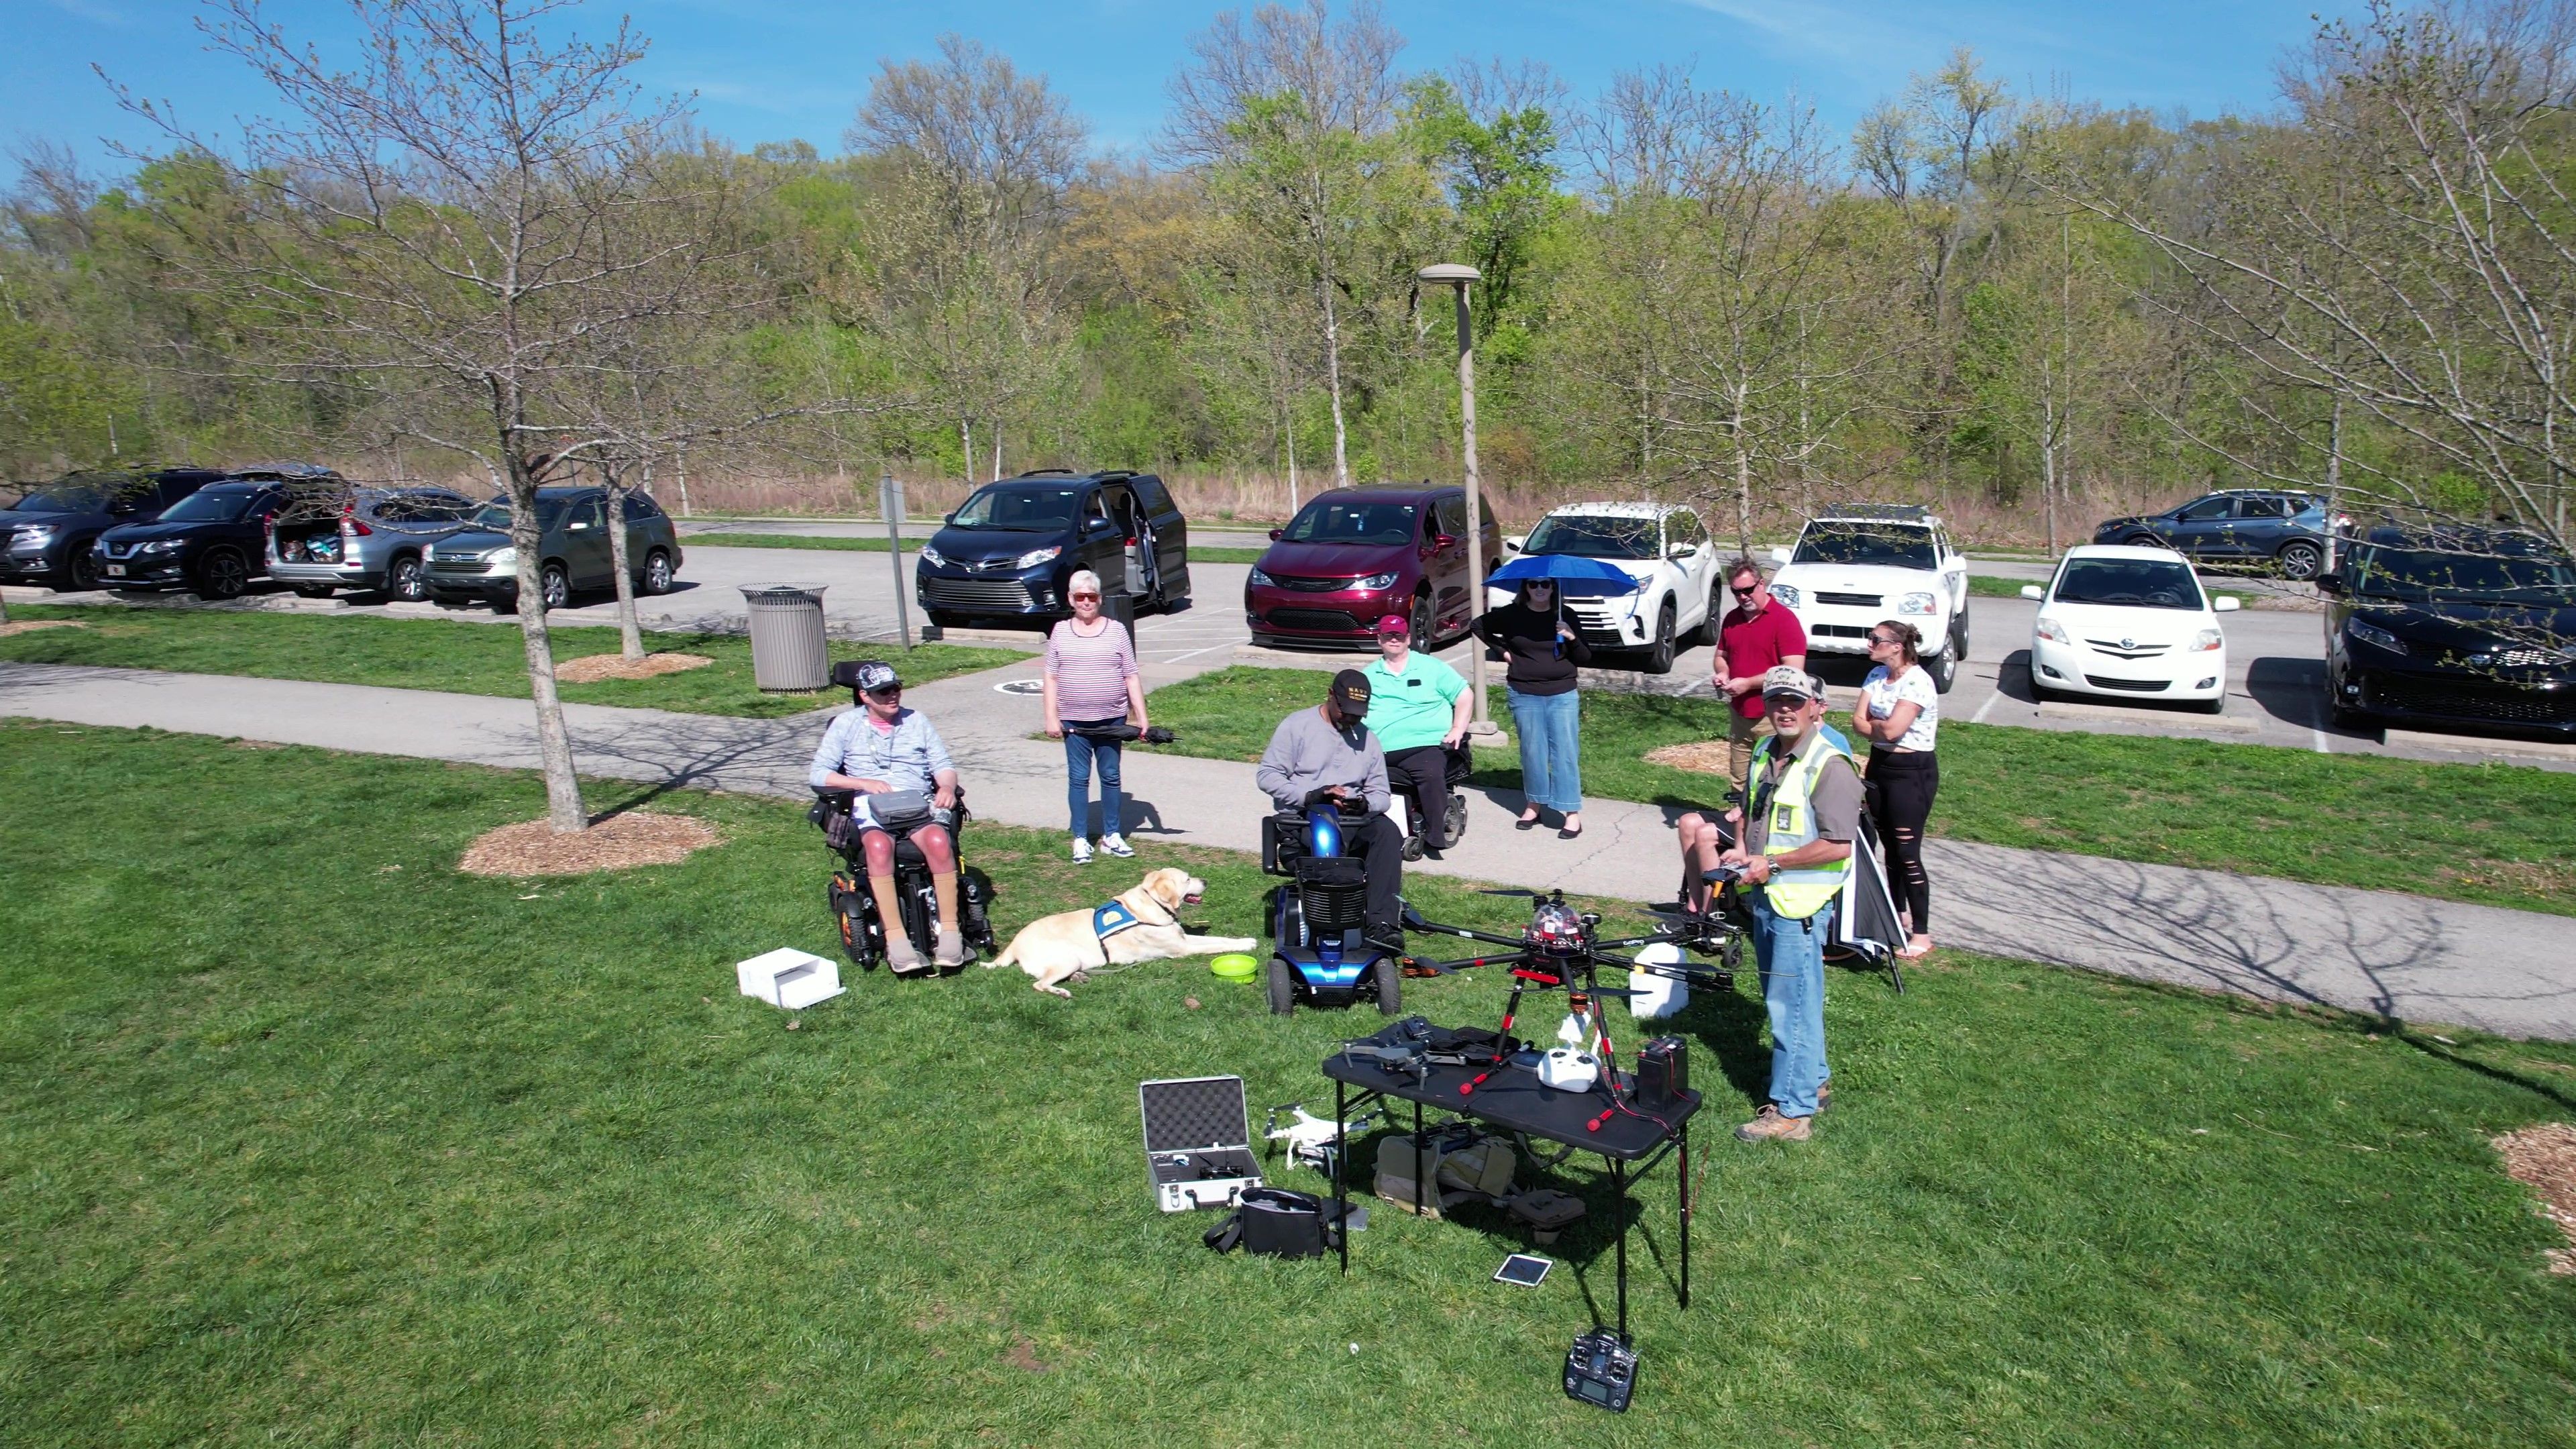 Group activity drone flight